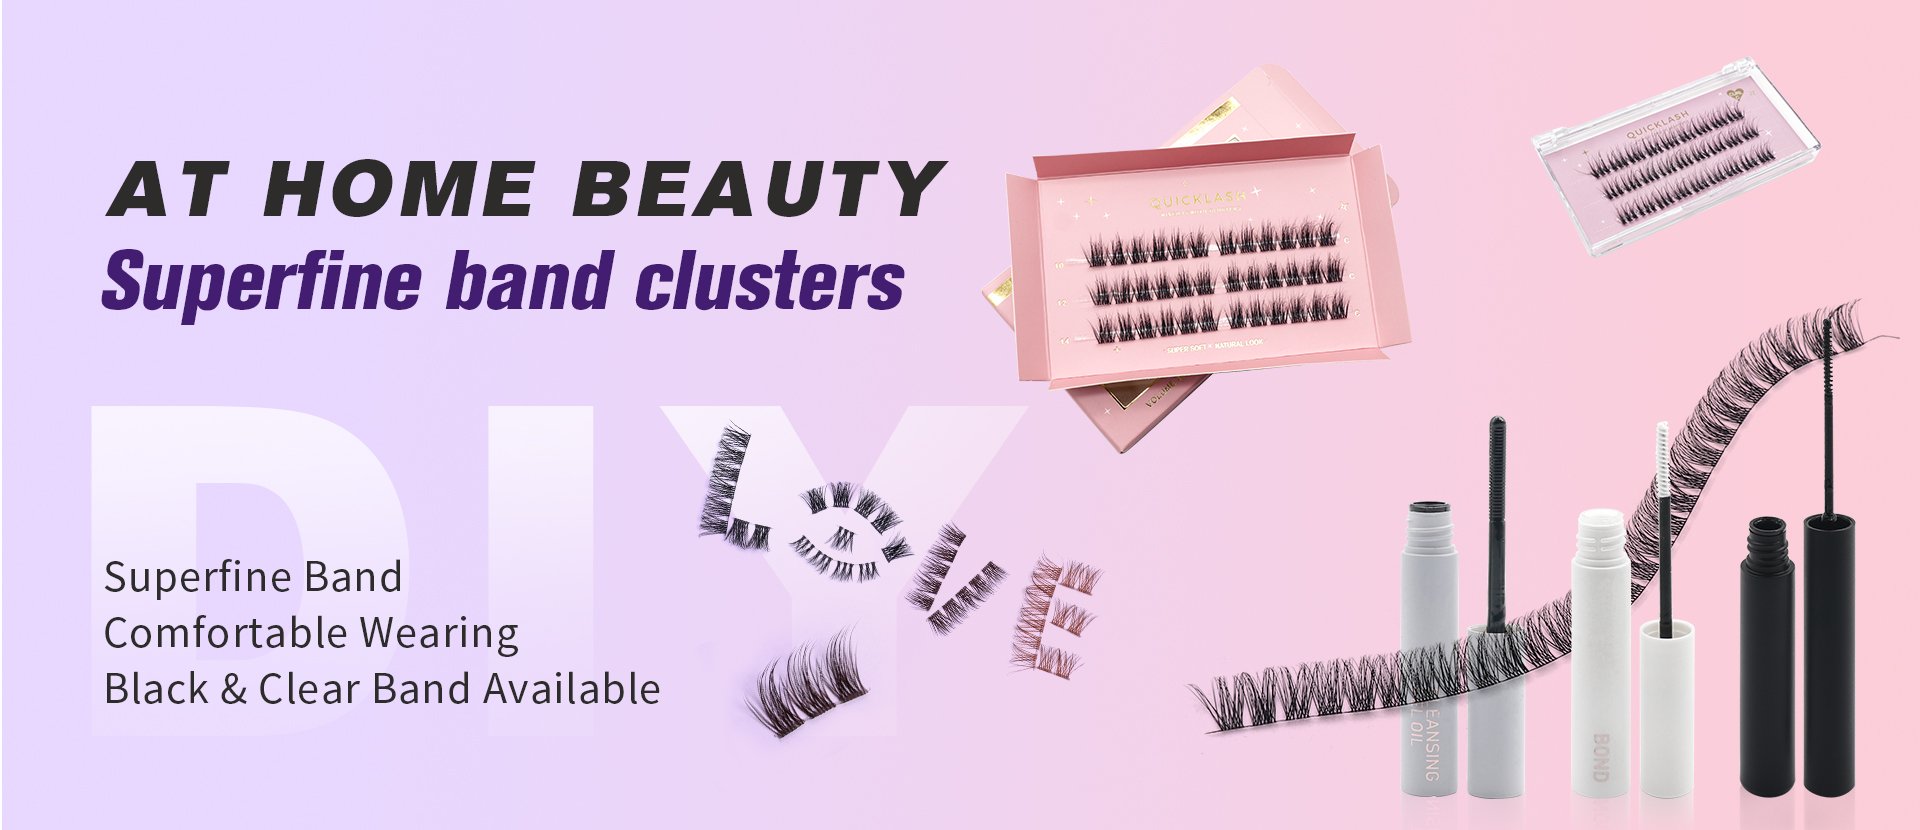 DIY cluster lashes kit